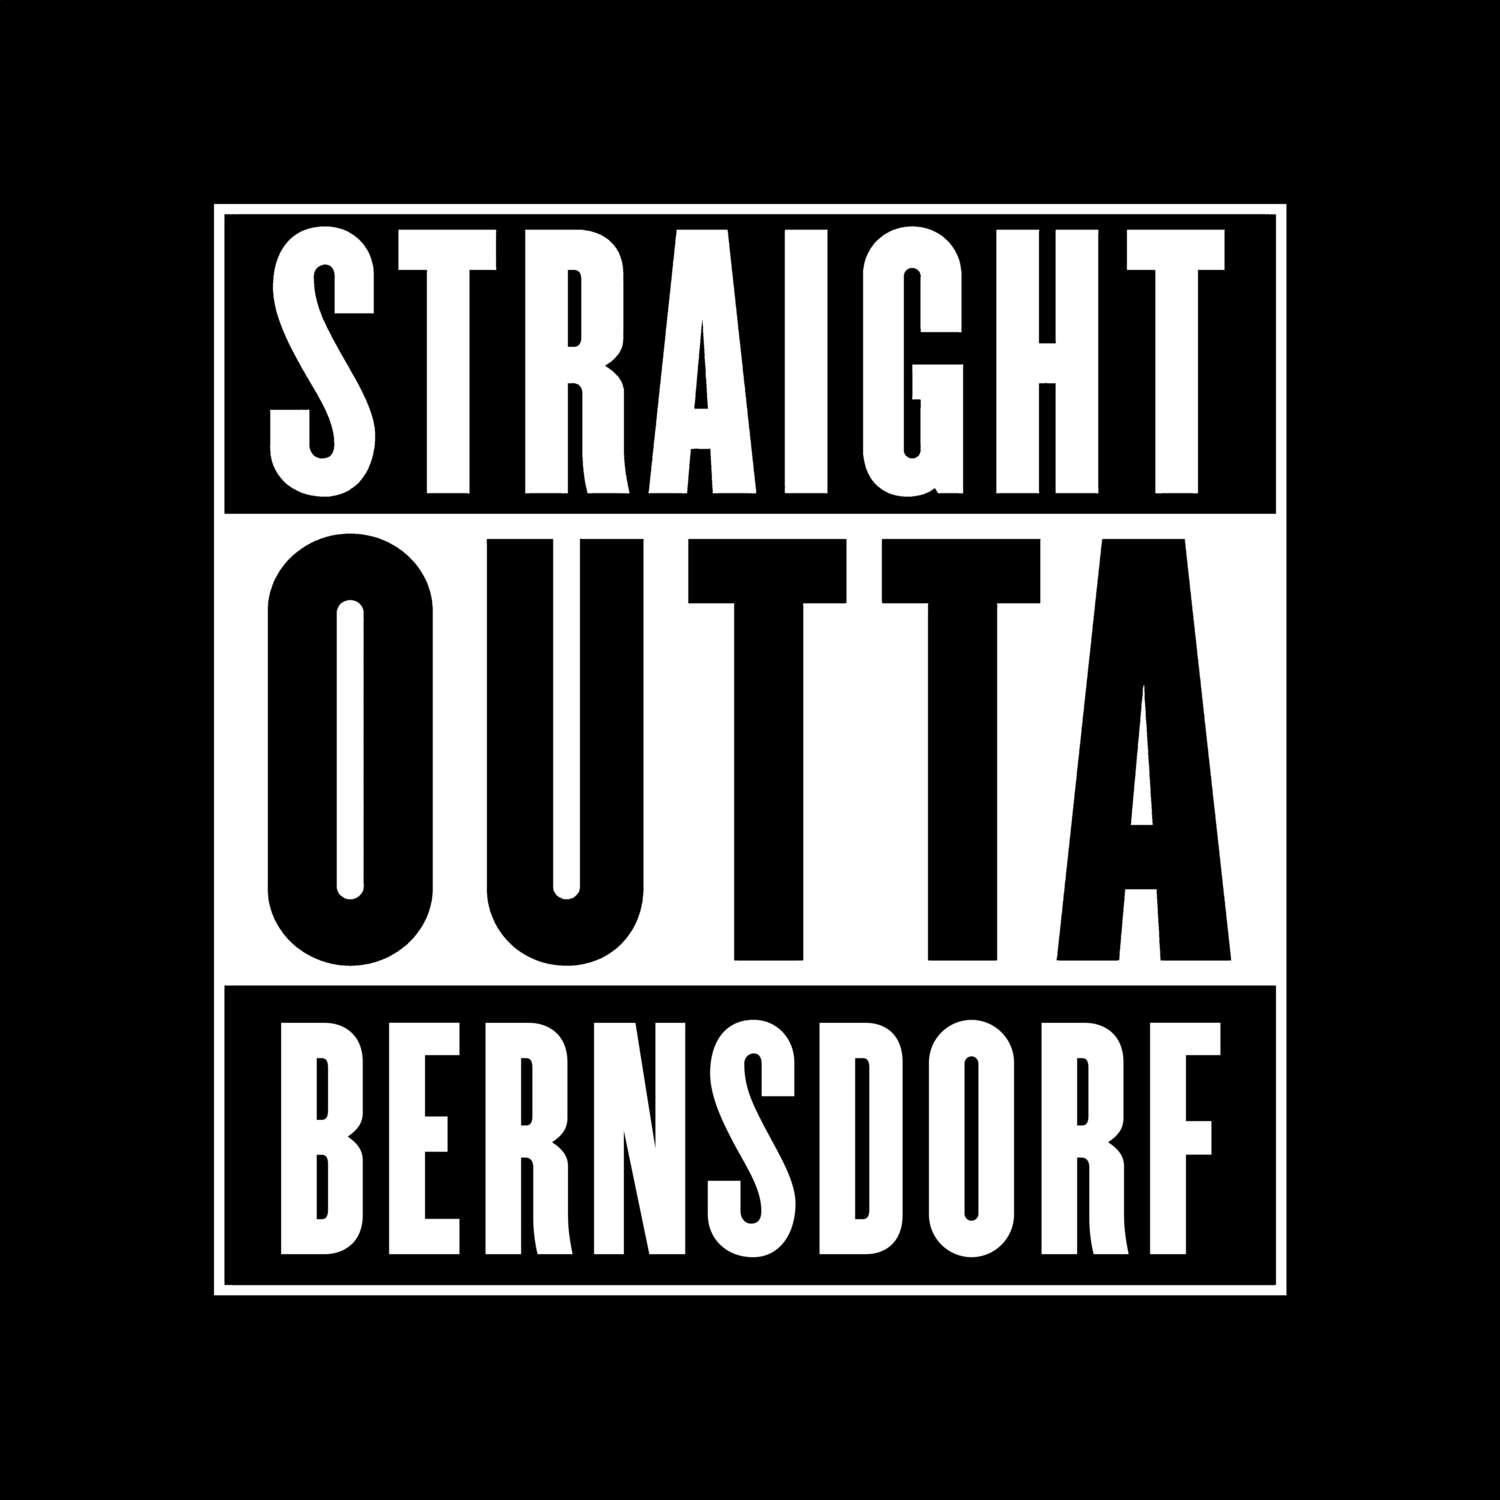 Bernsdorf T-Shirt »Straight Outta«